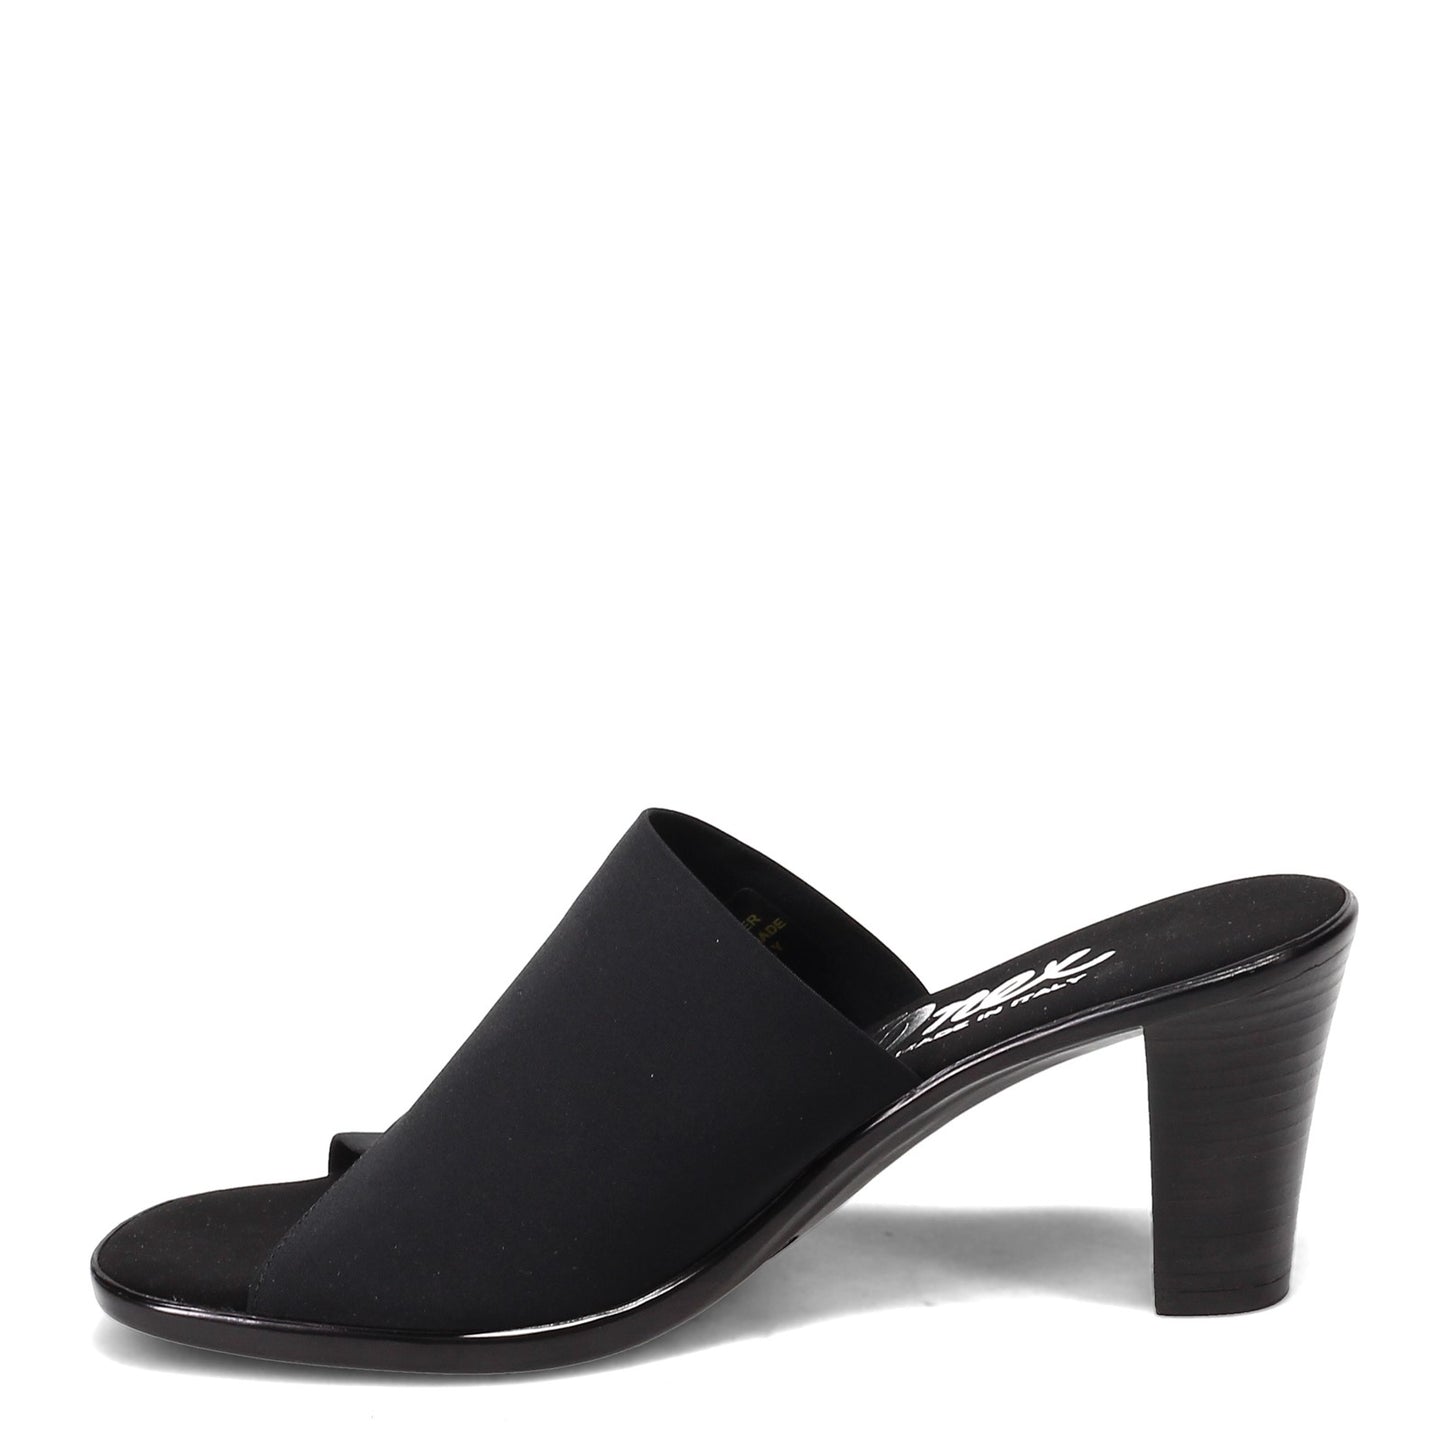 Peltz Shoes  Women's Onex Crista Heeled Sandal BLACK CRISTA-BLACK